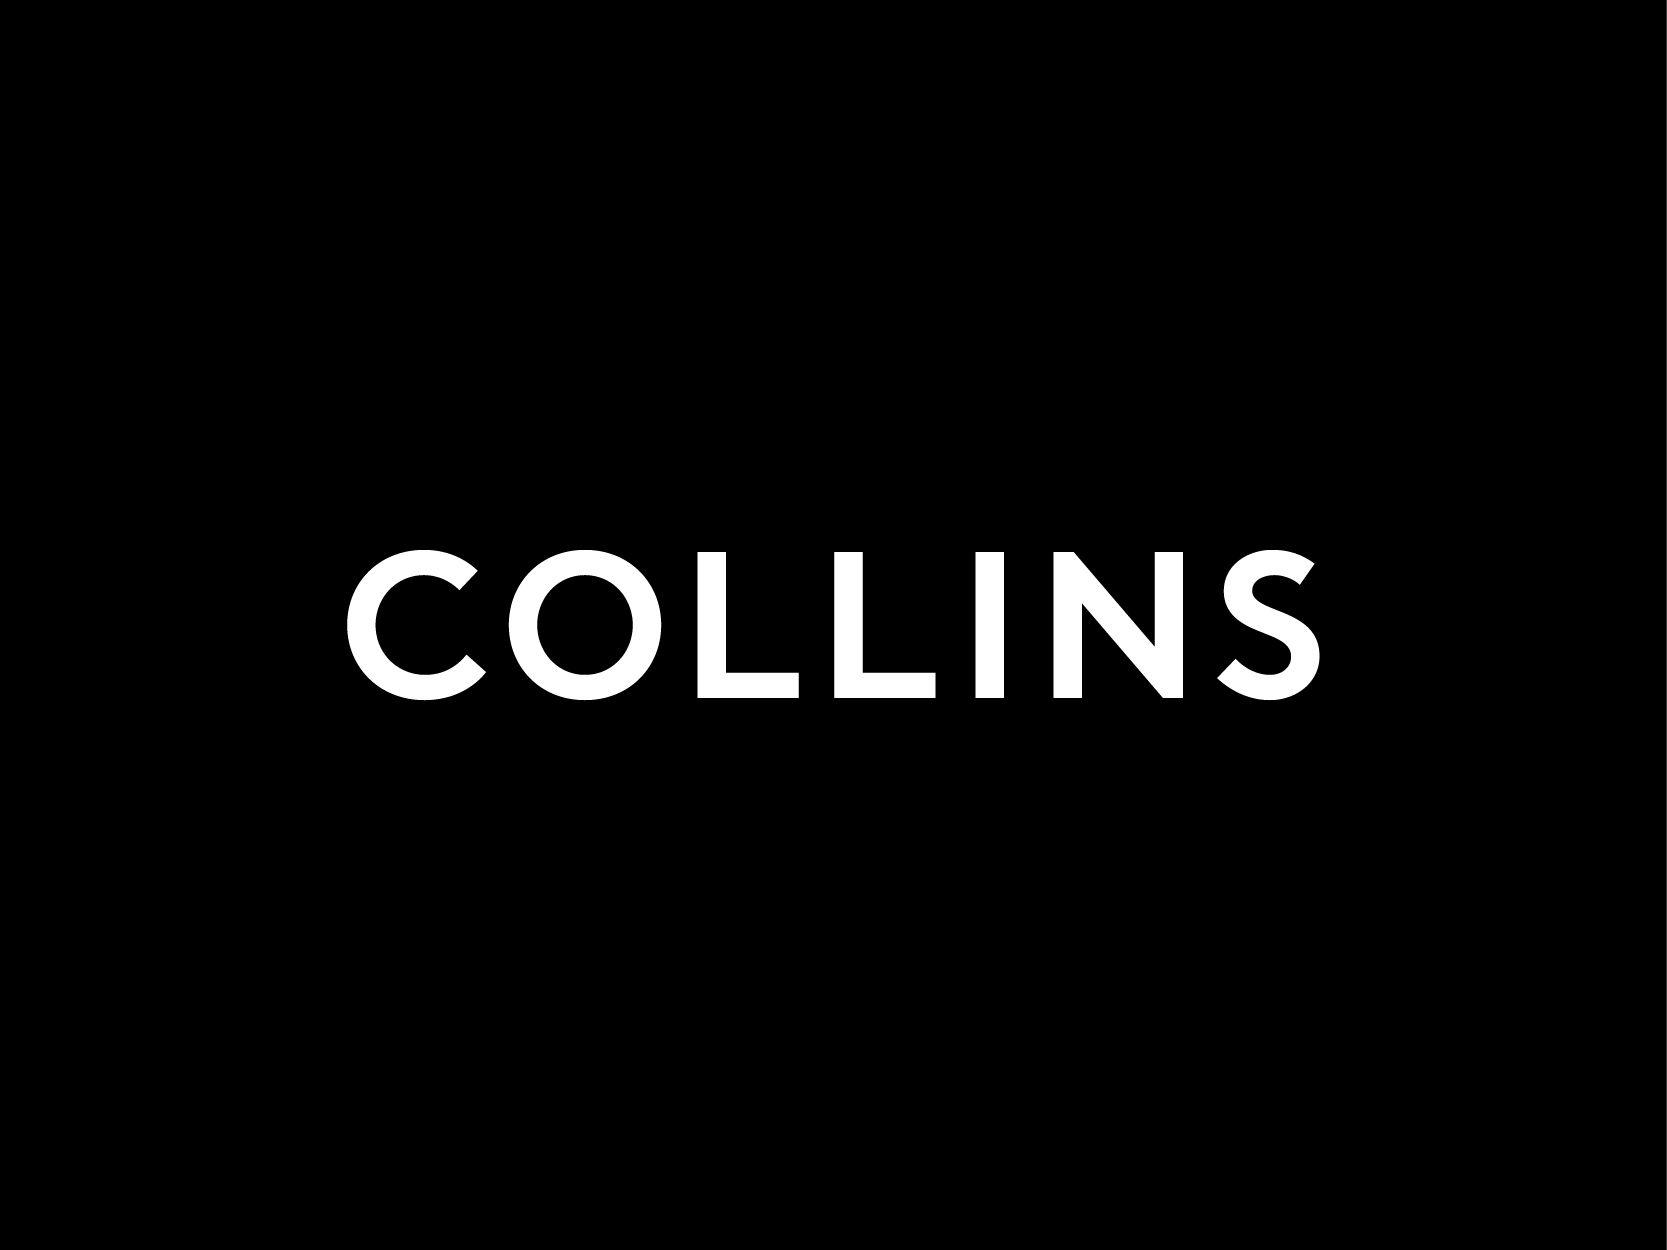 The Collins Logo - Collins